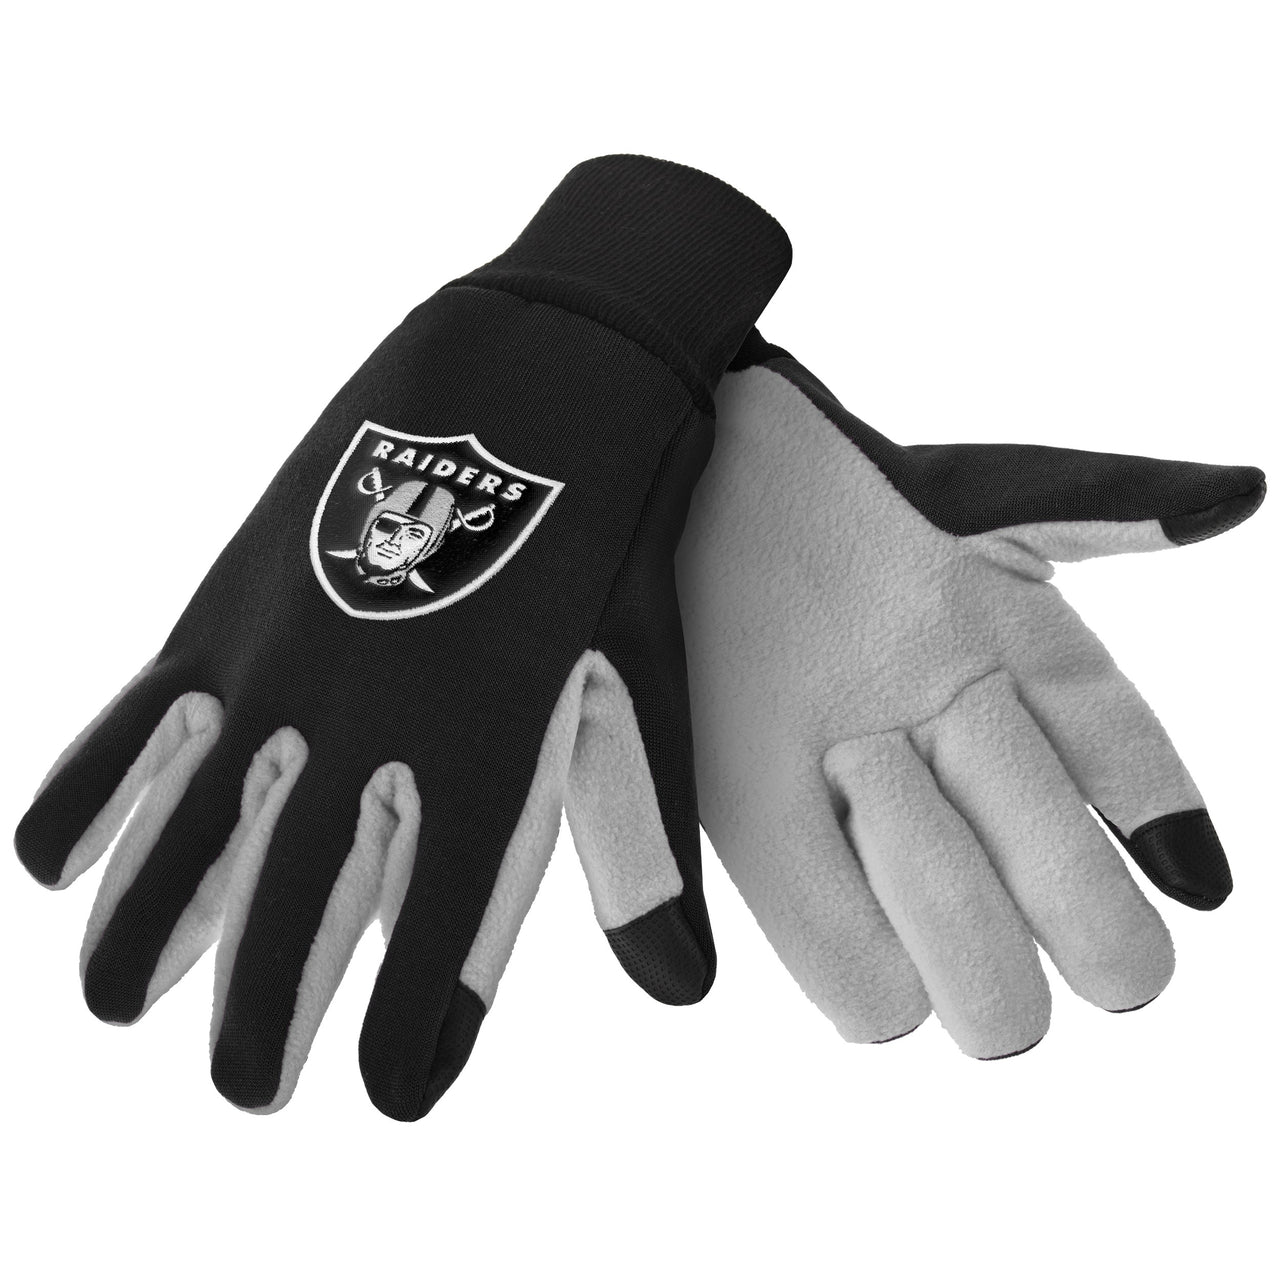 Las Vegas Raiders NFL Football Texting Gloves - Dynasty Sports & Framing 